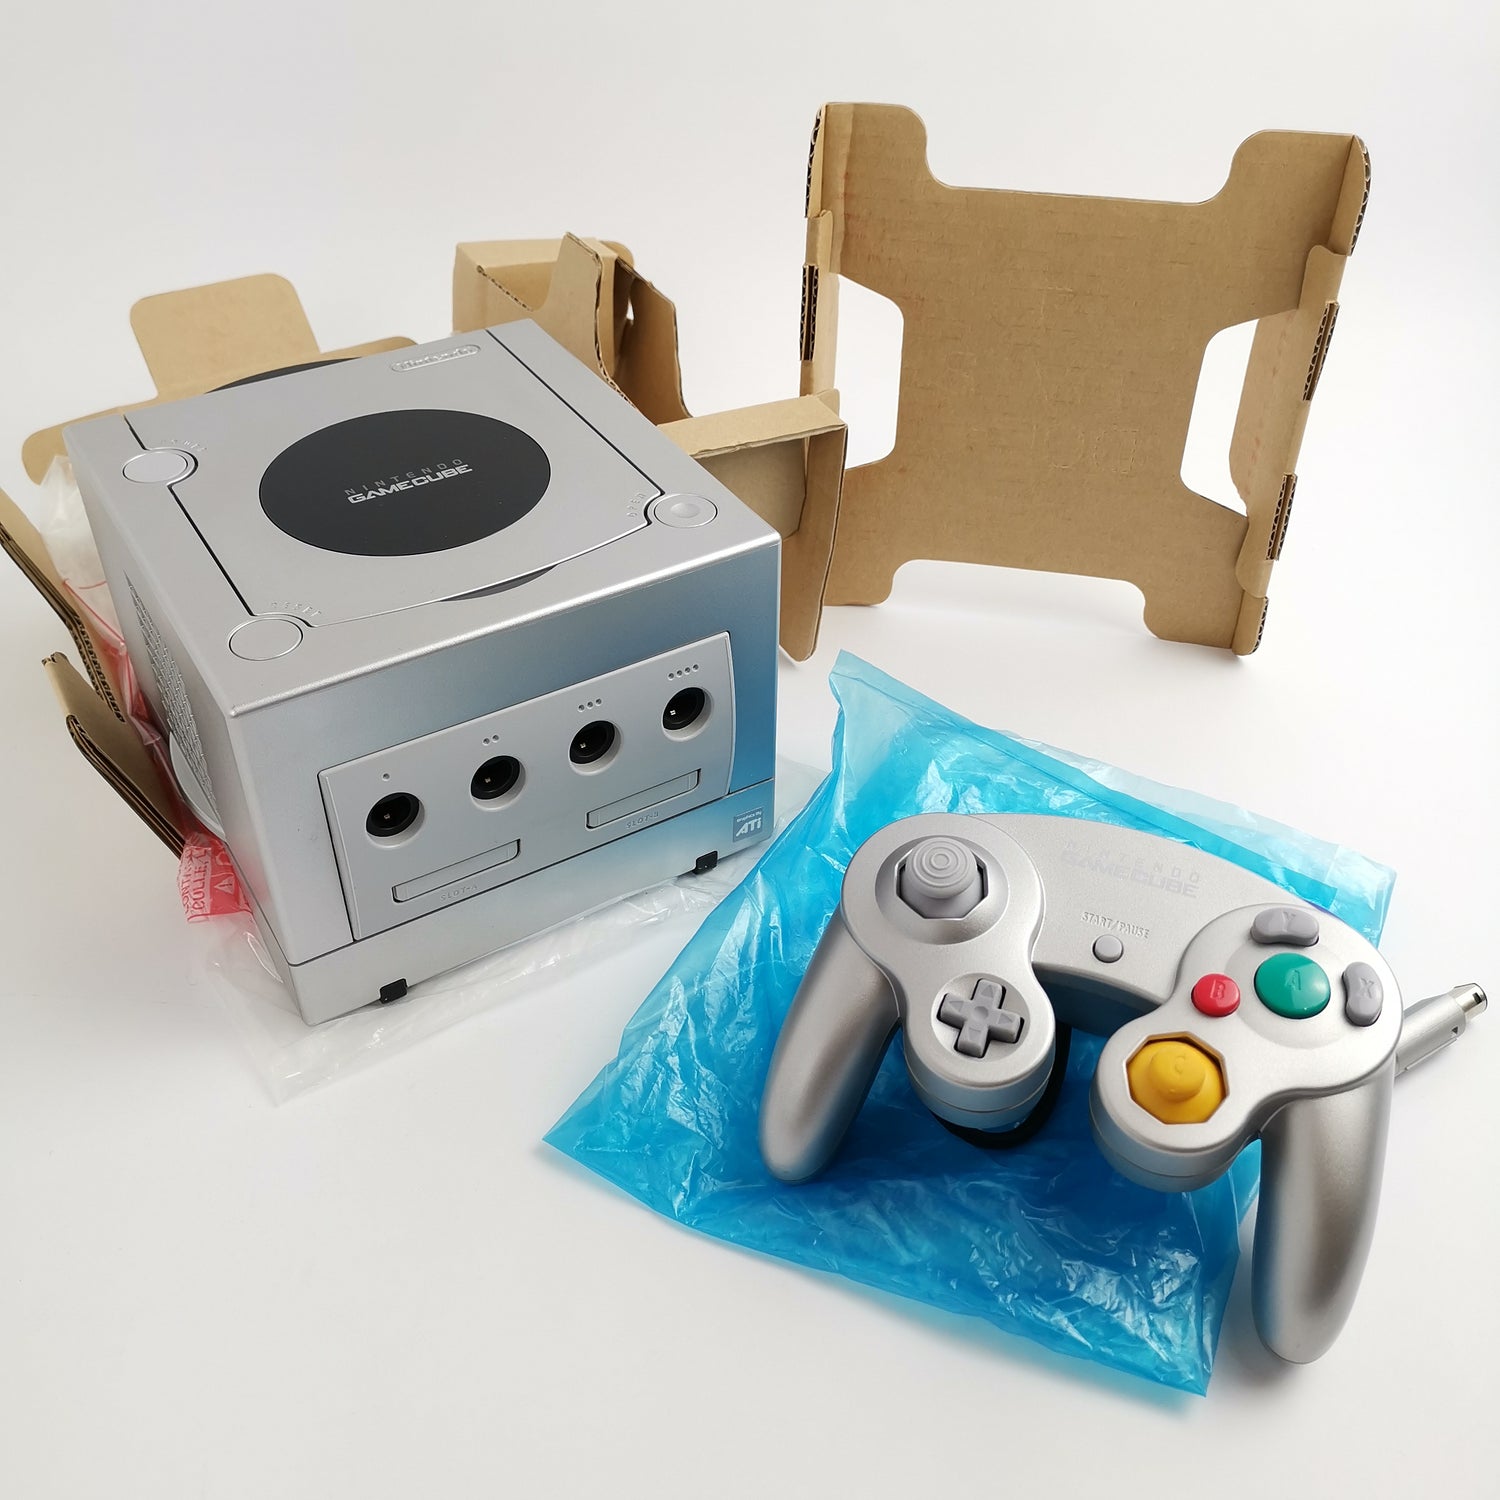 Nintendo Gamecube Console: Limited Edition Platinum [USA] | Silver Silver orig